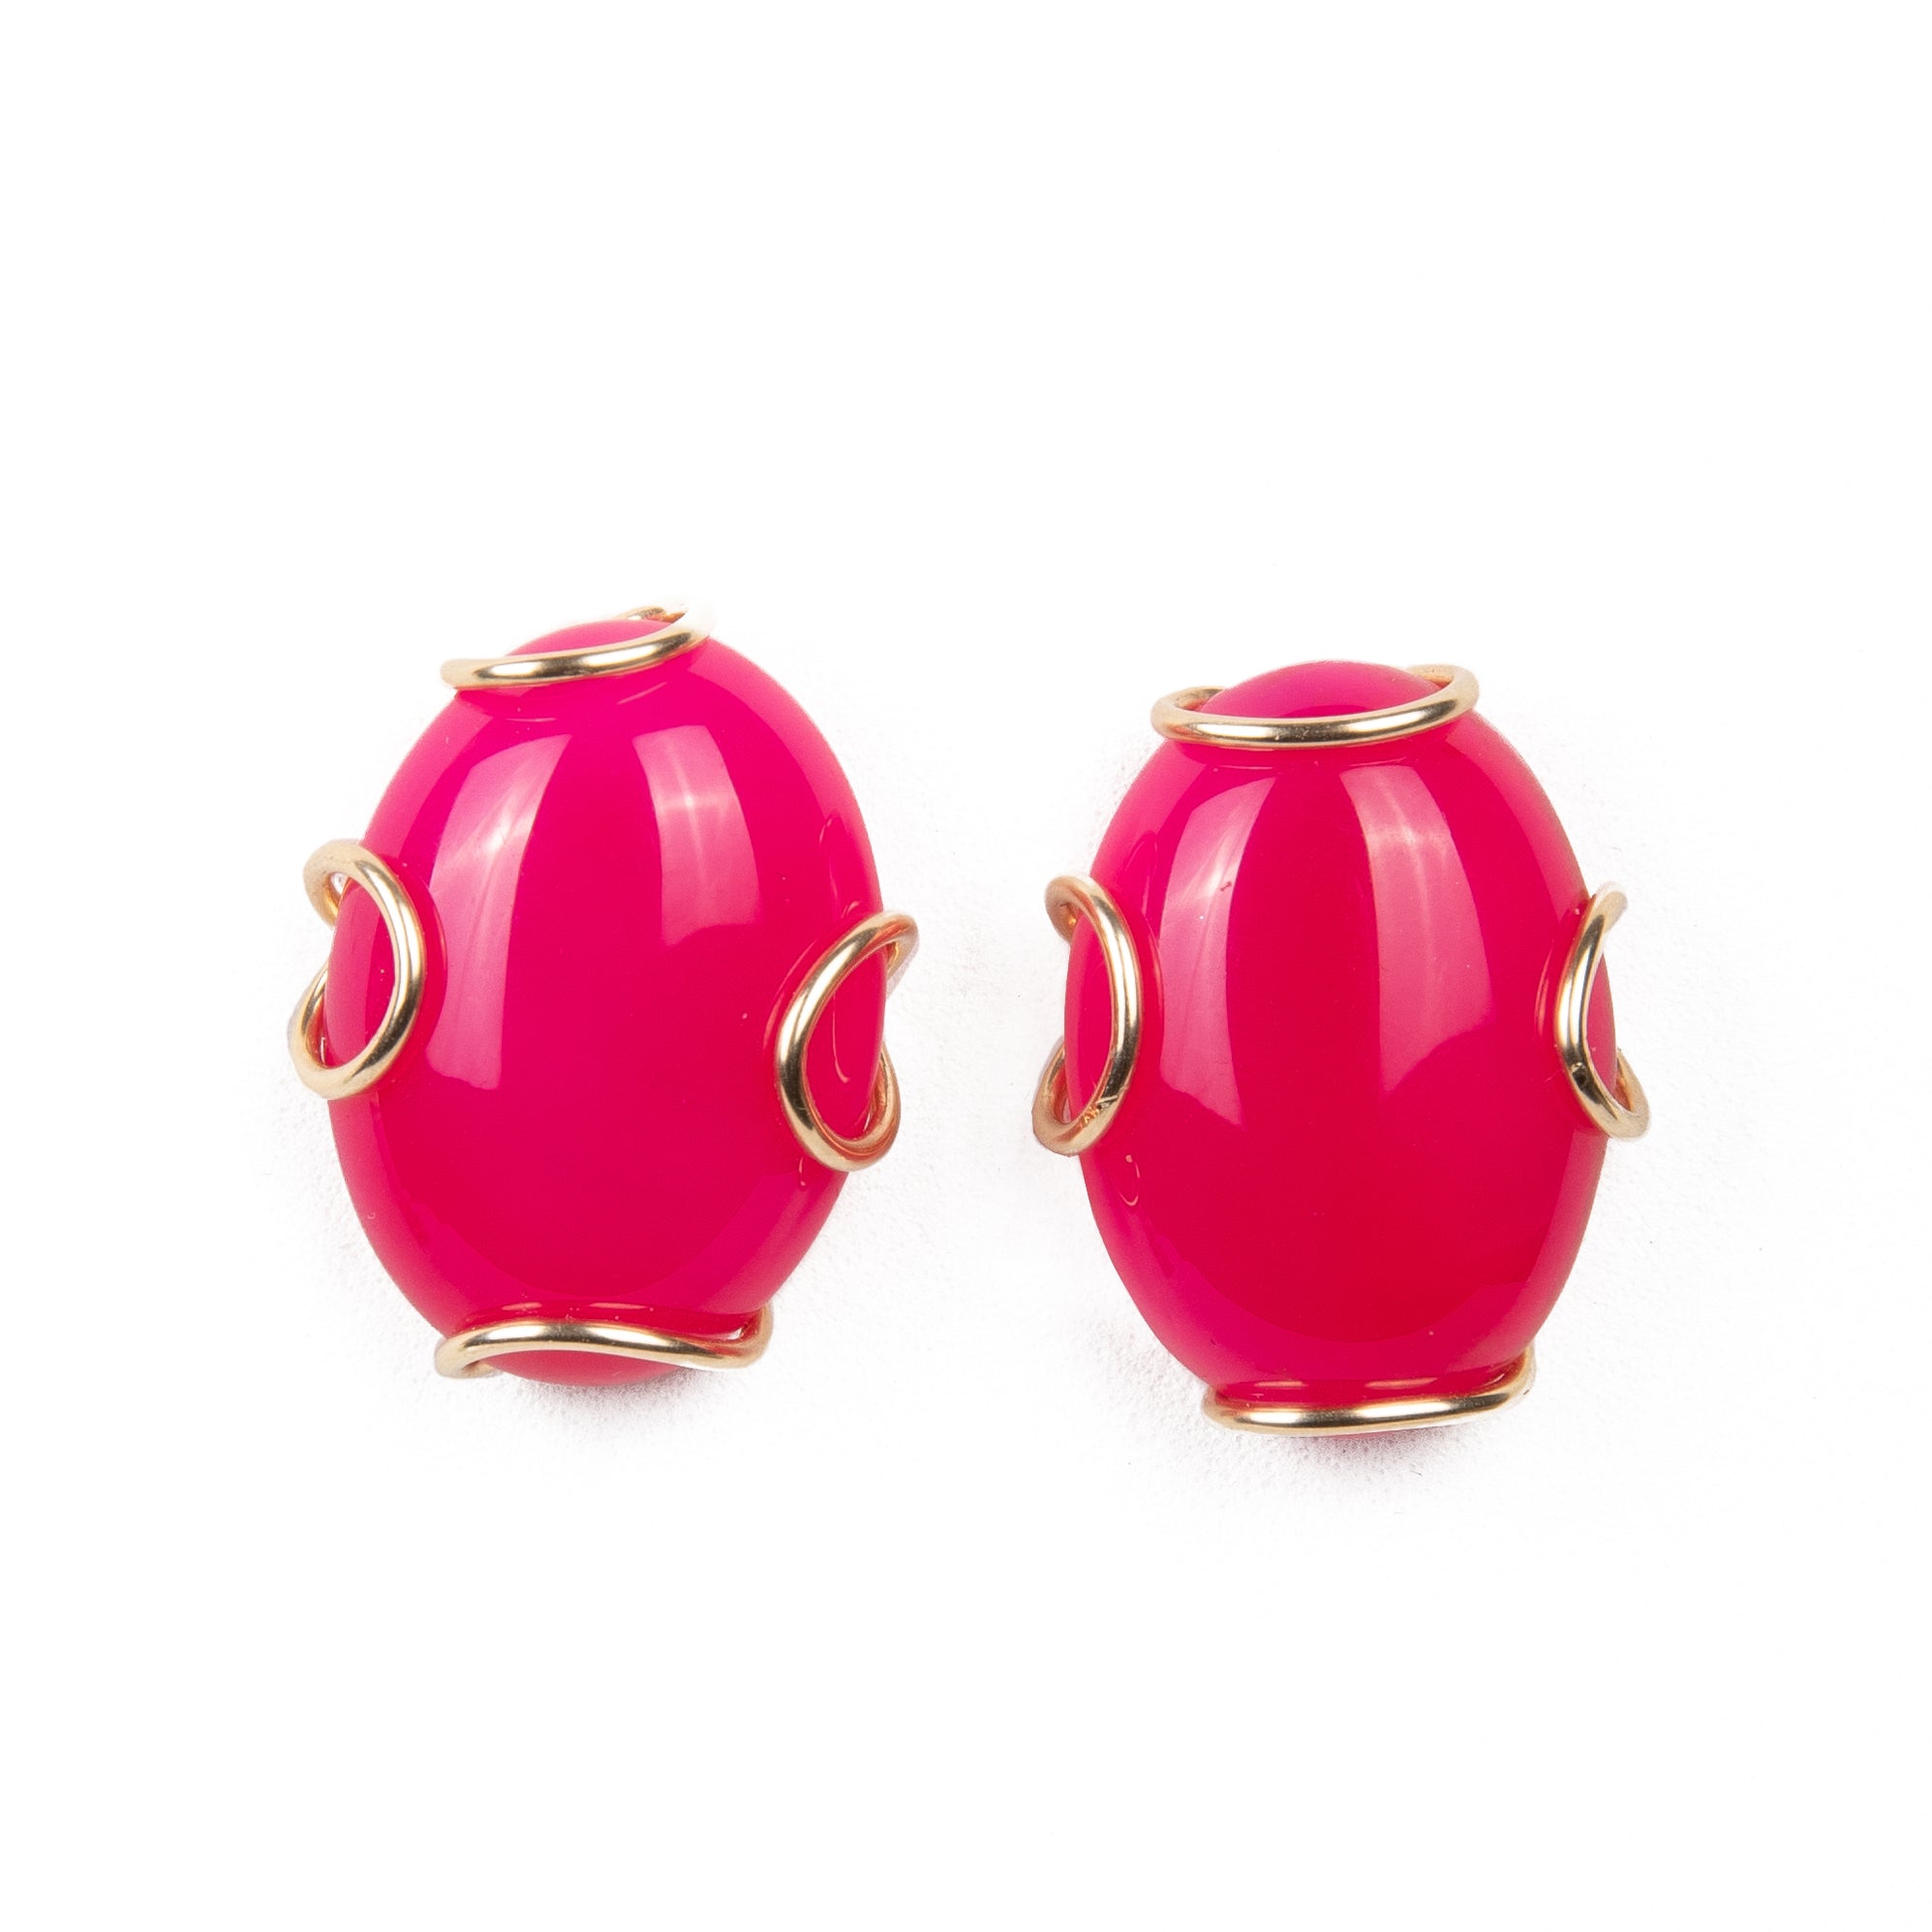 Zingiber Earrings - Pink Agate Earrings TARBAY   